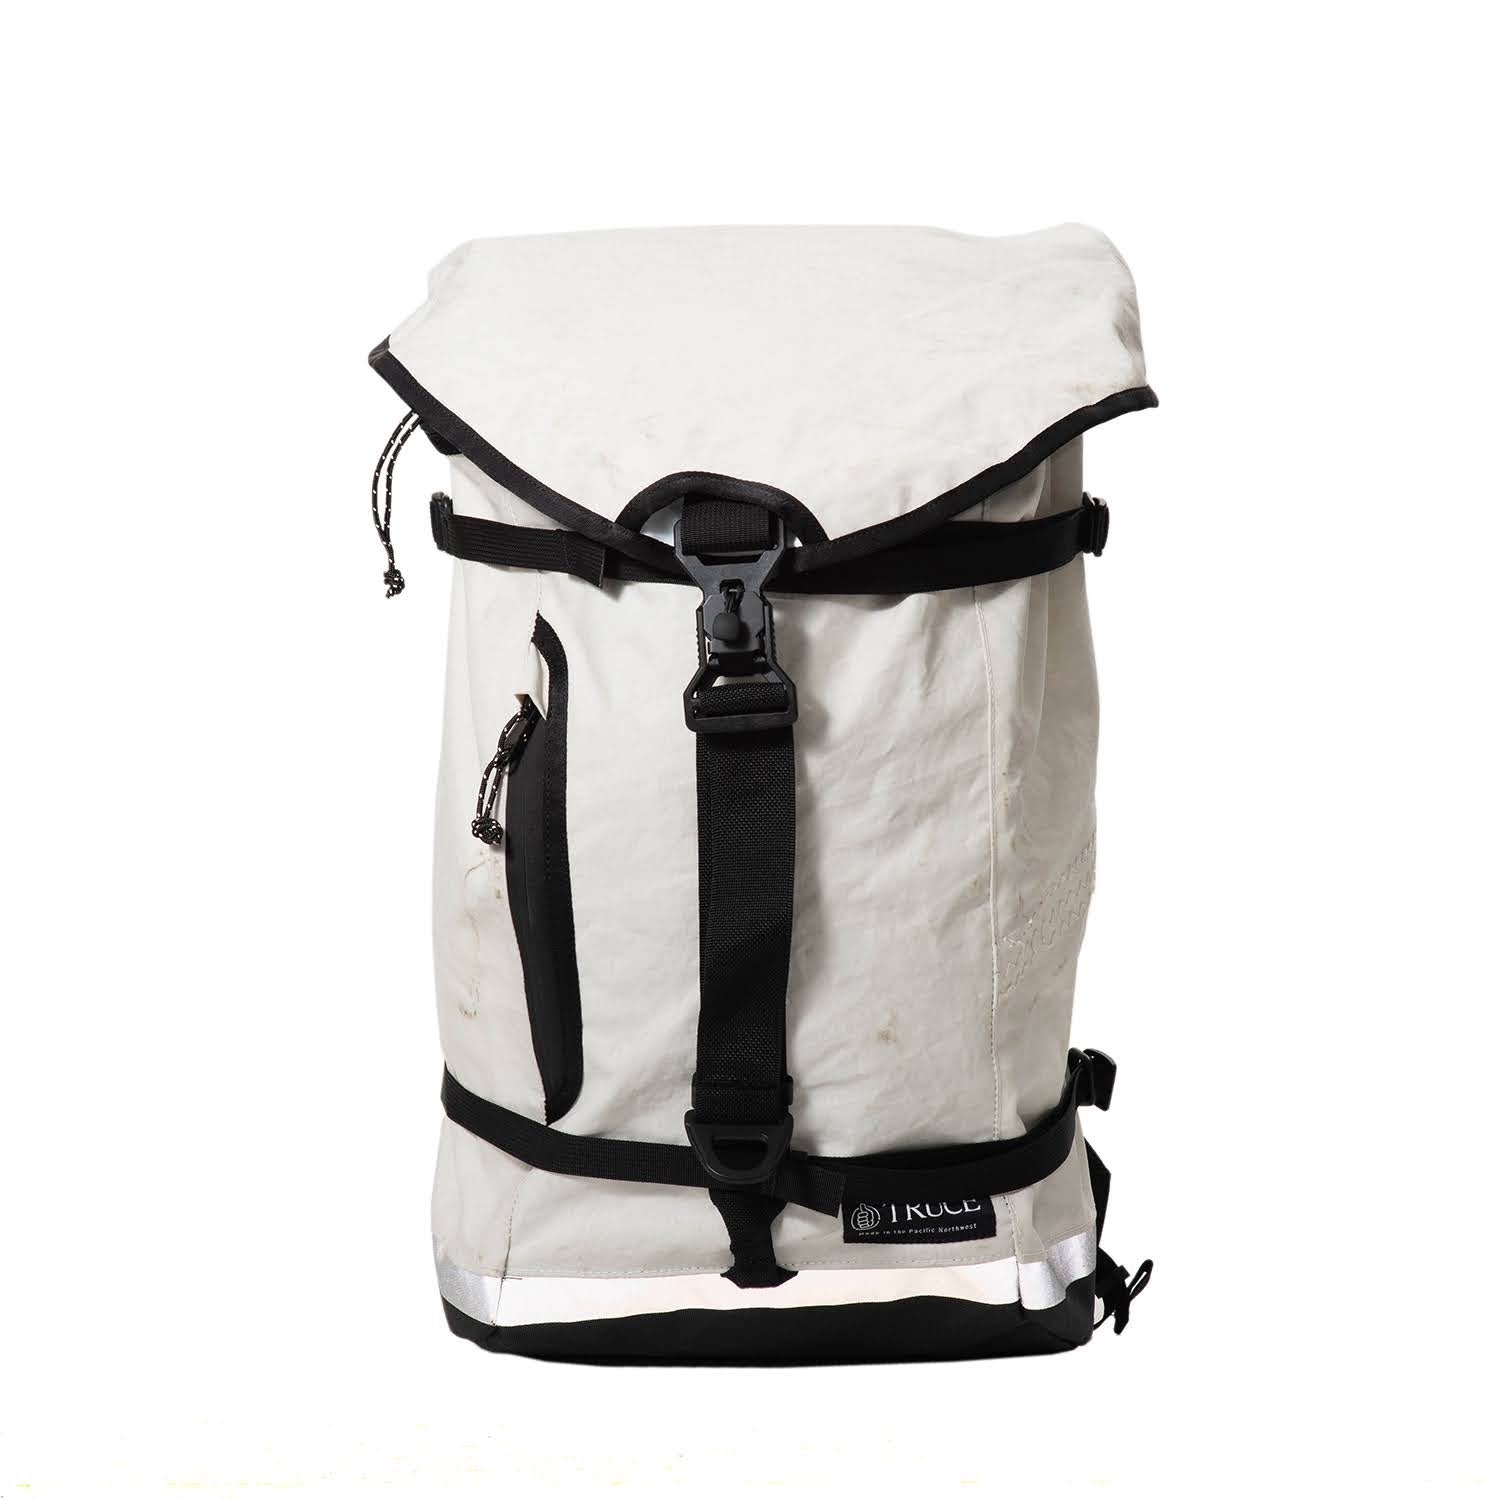 TRUCE DESIGNS Drop Liner Backpack